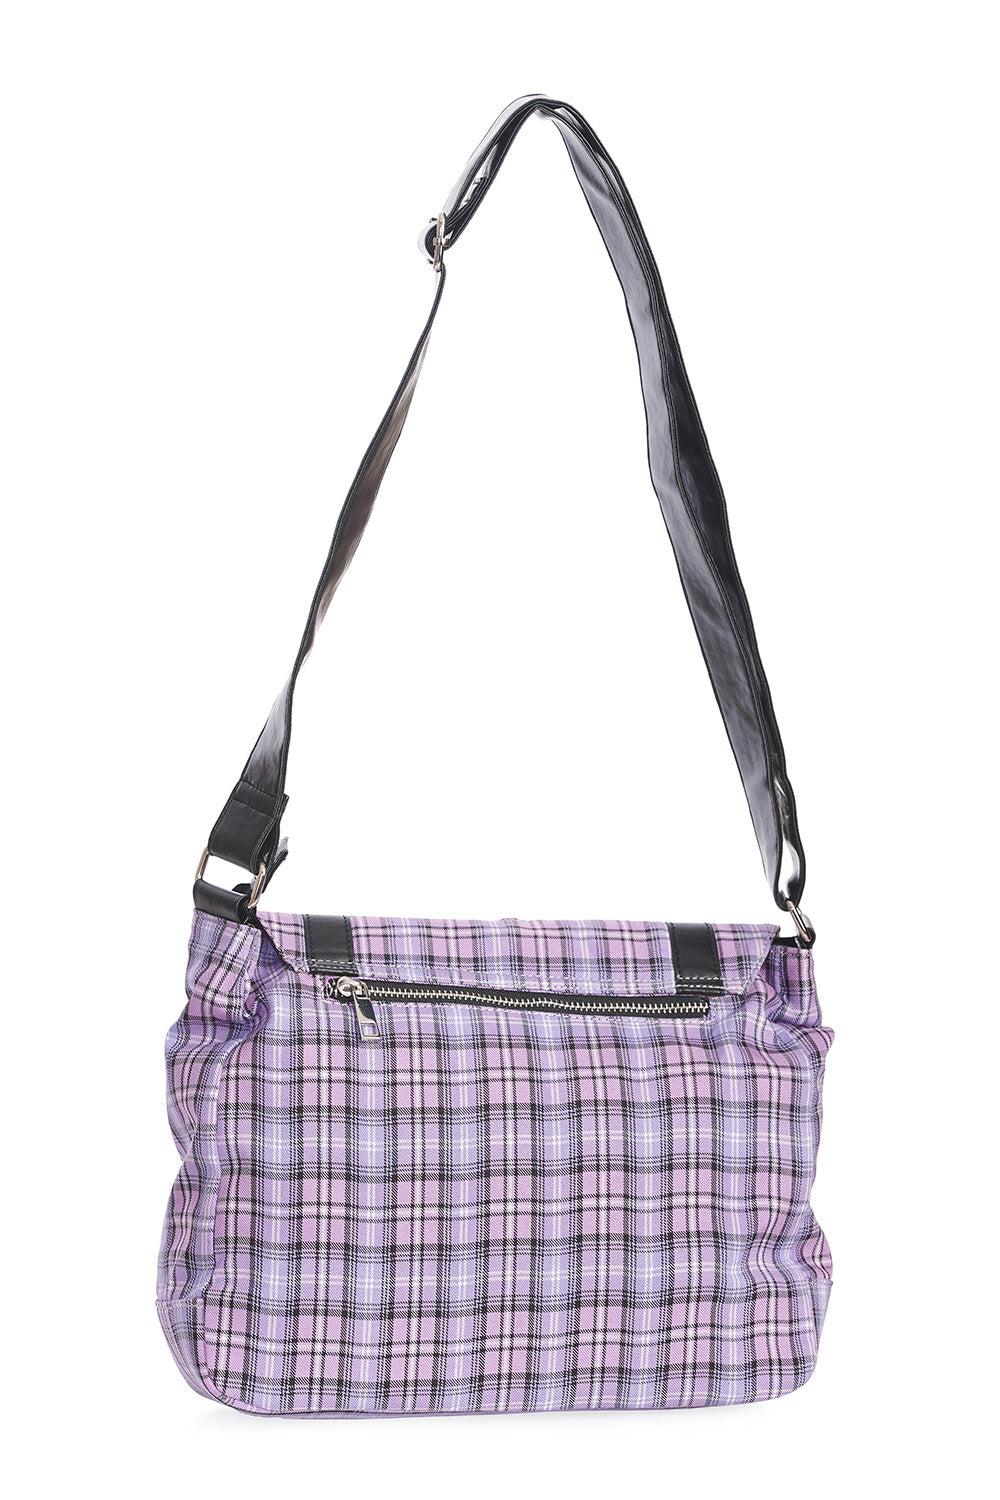 Punk Plaid Print Tartan Messenger Shoulder Bag Crossbody Handbag Women's Purse (Lilac)